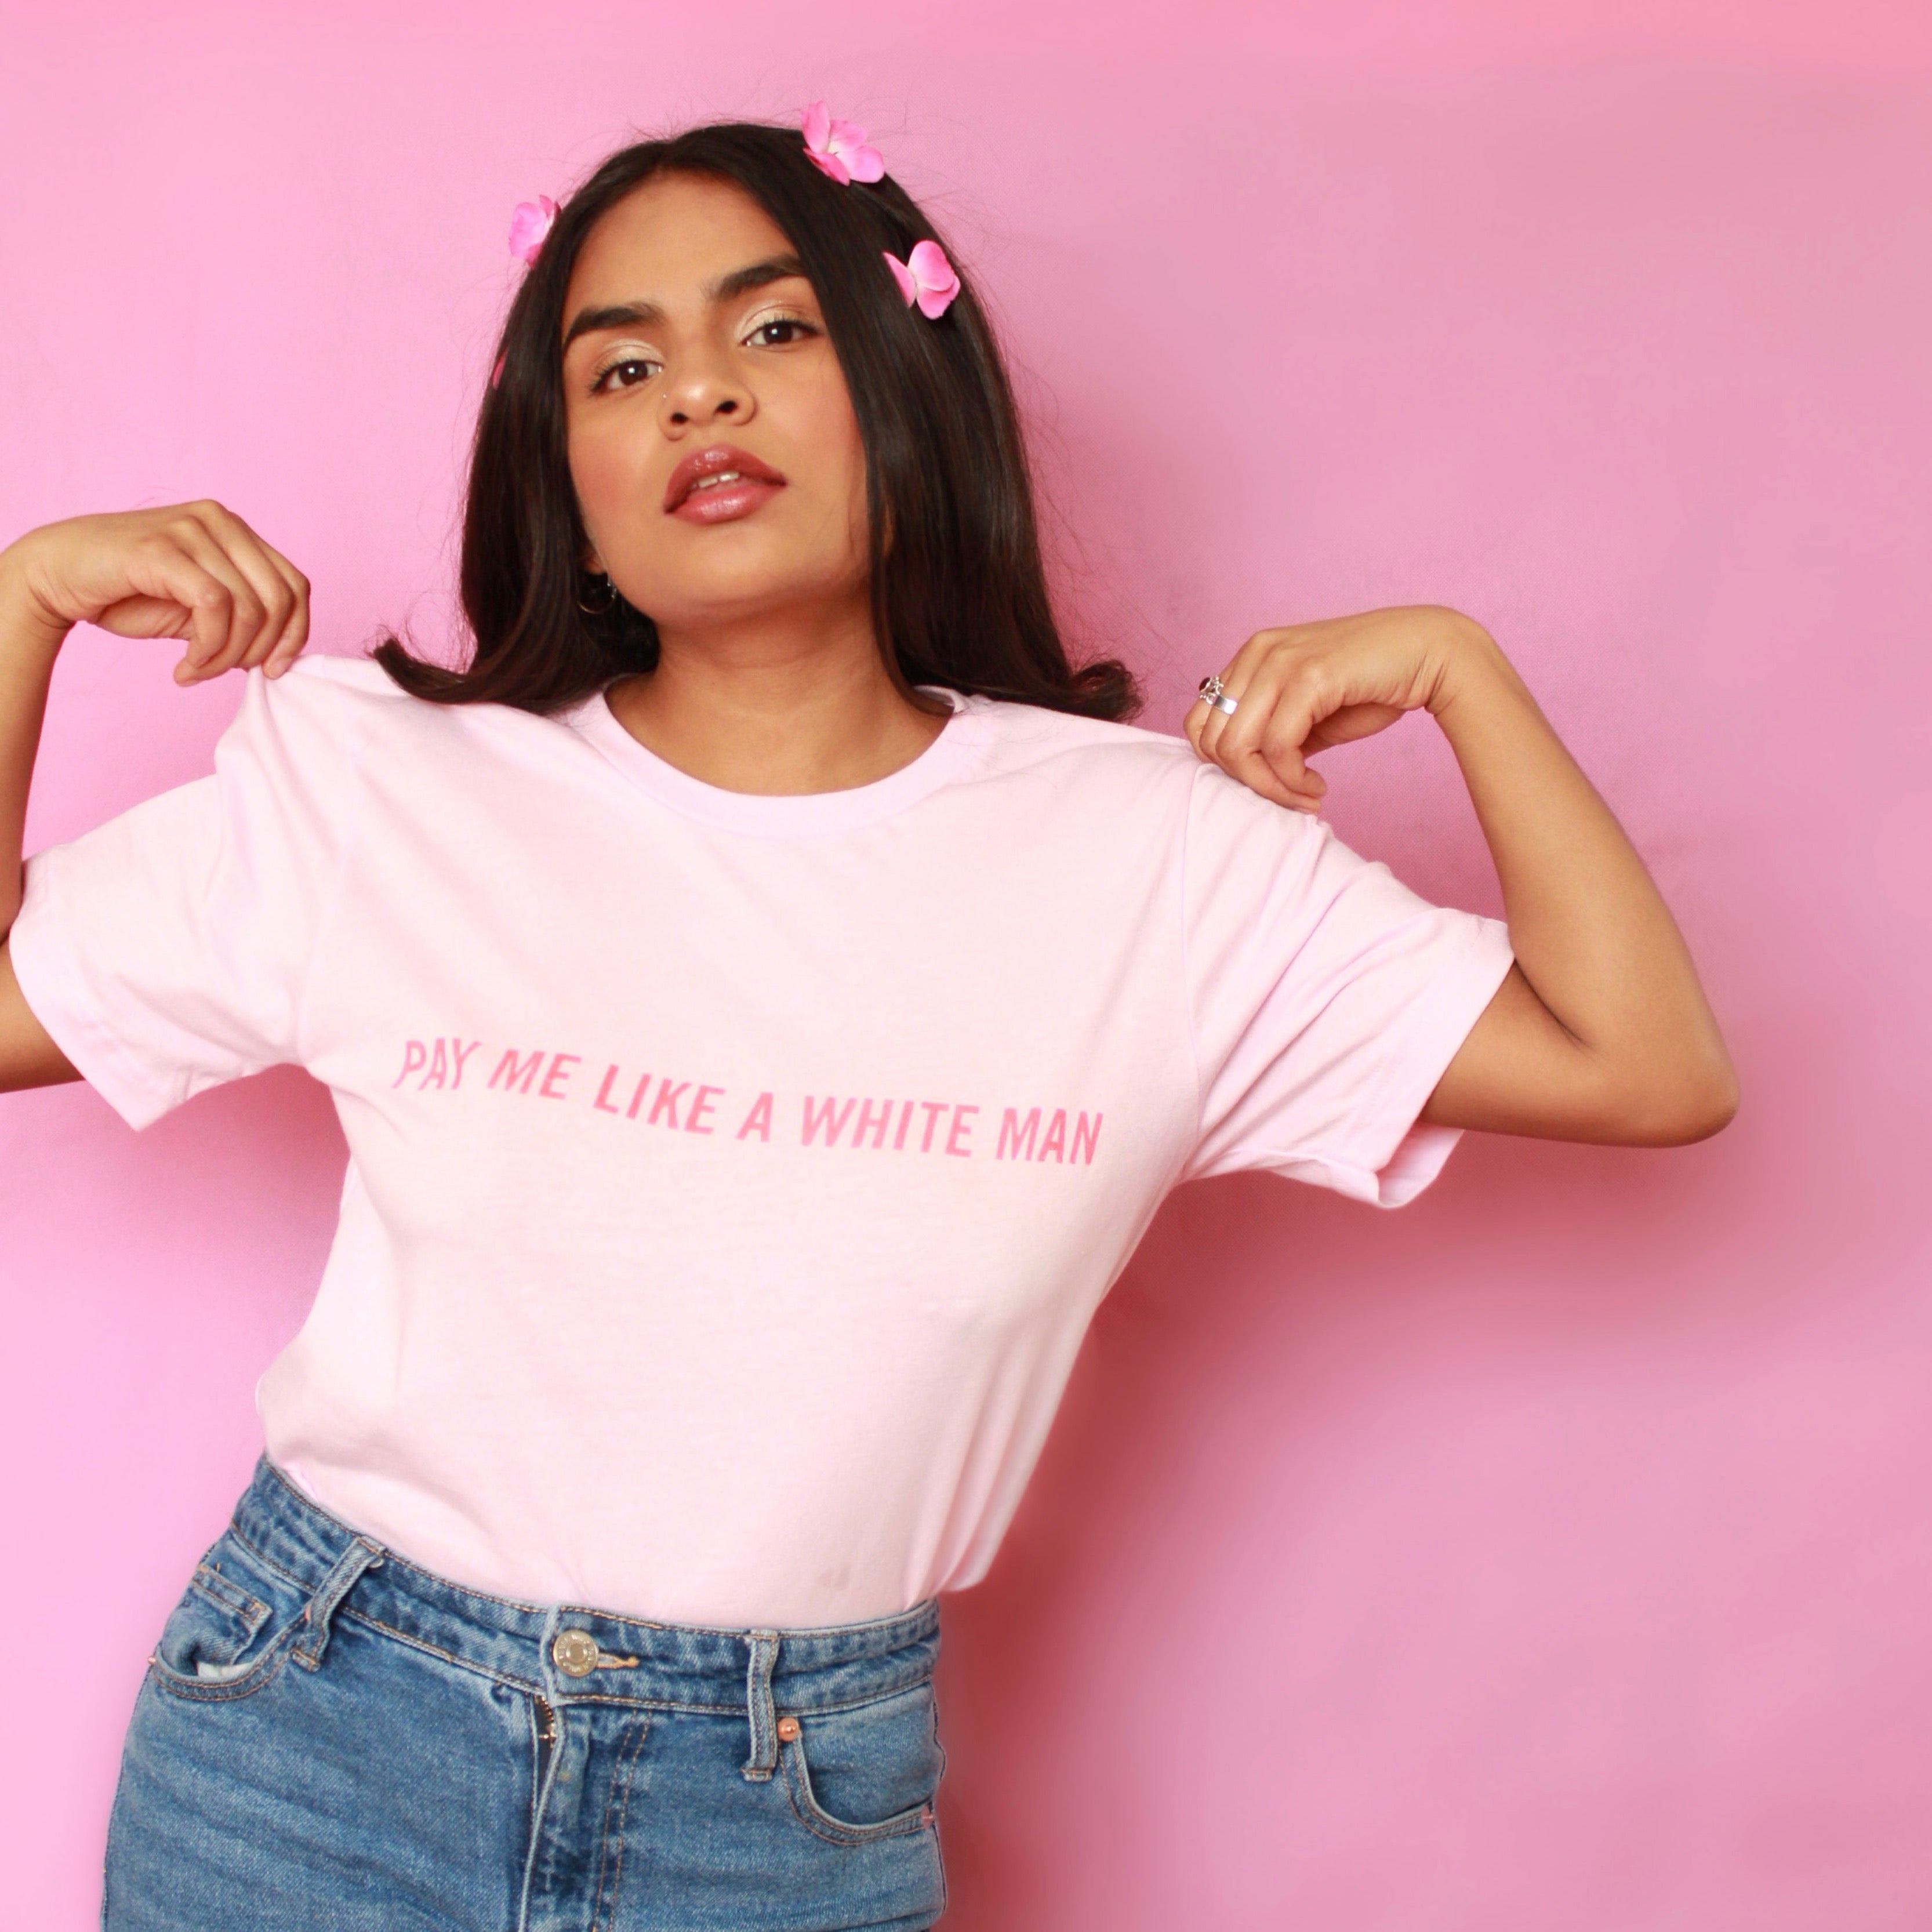 Pay Me Like A White Man Unisex Feminist T-shirt - Shop Feminist Apparel -Shop Women’s Rights T-shirts - Pink Women’s T-shirt